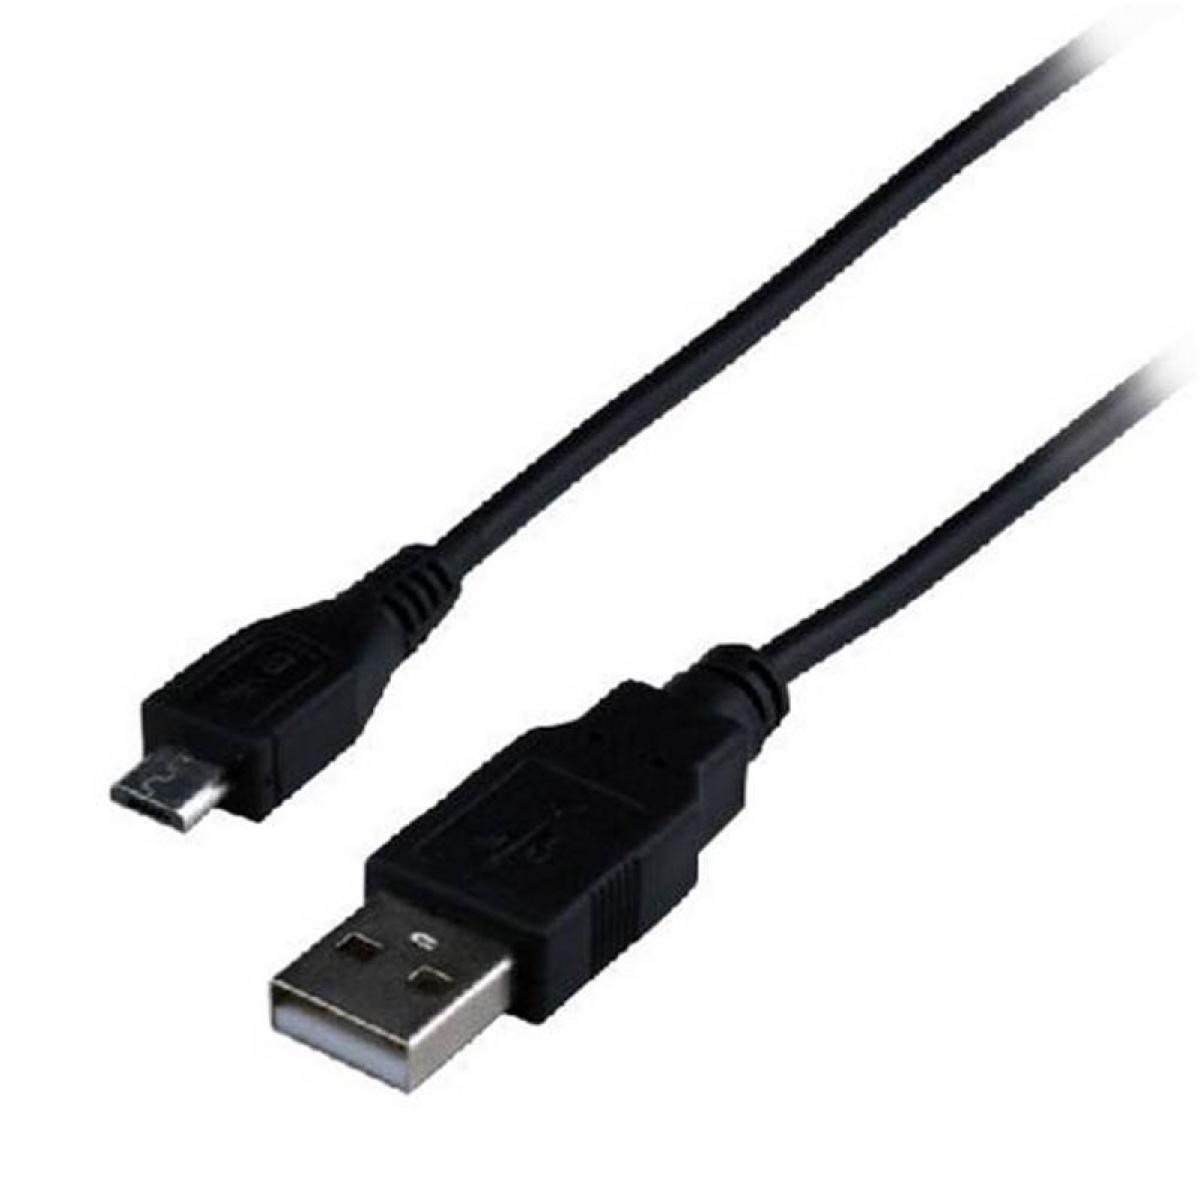 Logilink - LOGILINK Cordon USB2.0 Type A Male vers Micro USB Type B male - 0.60m - Câble antenne